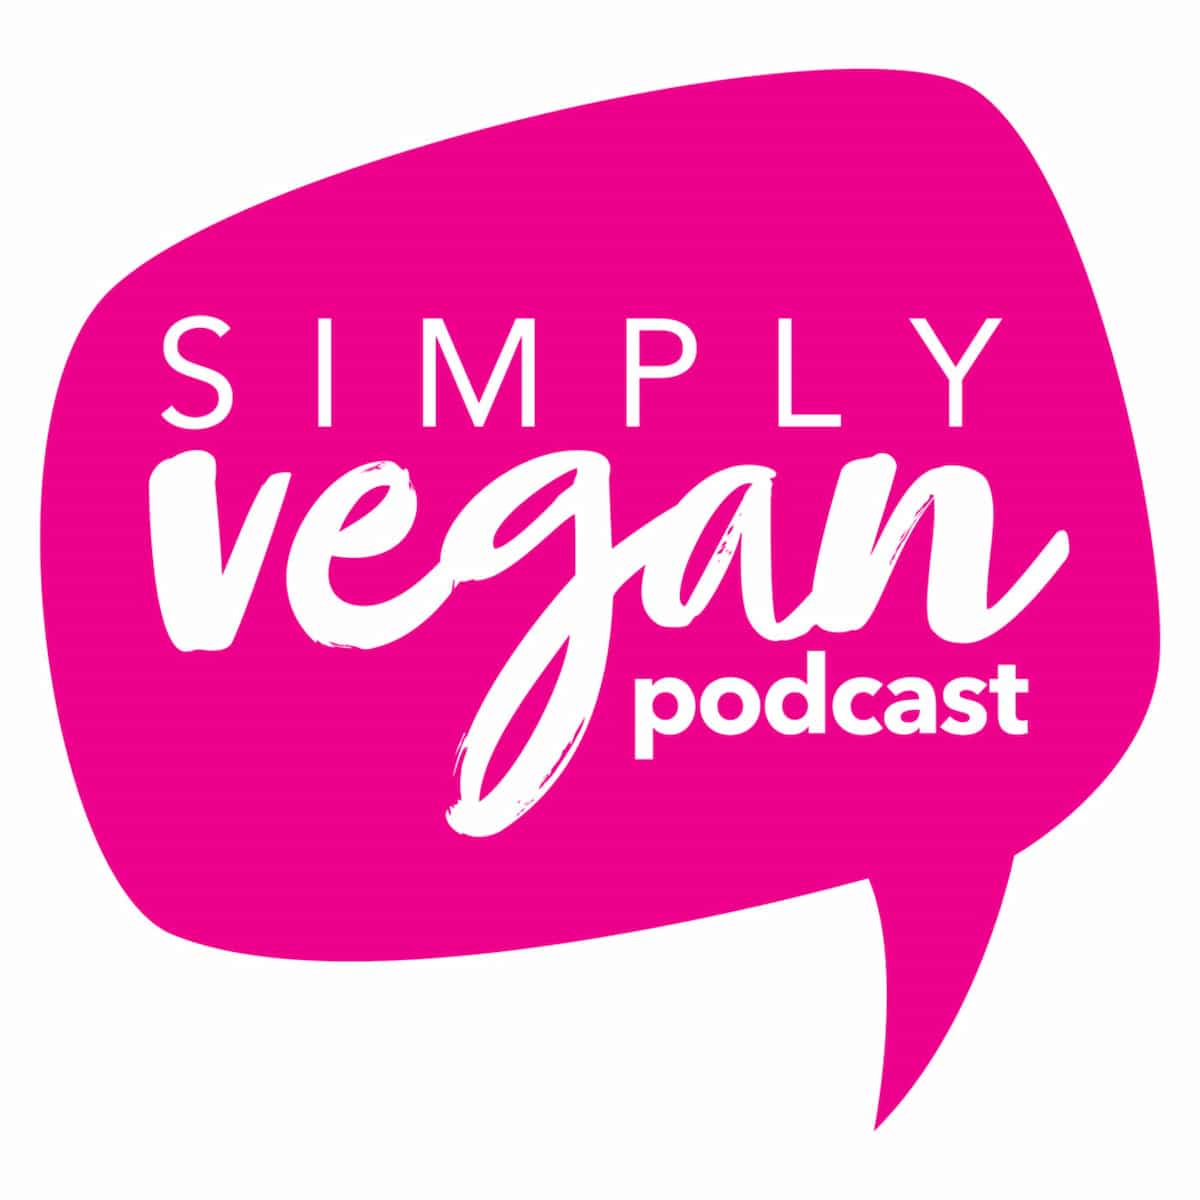 Simply Vegan Podcast cover art.